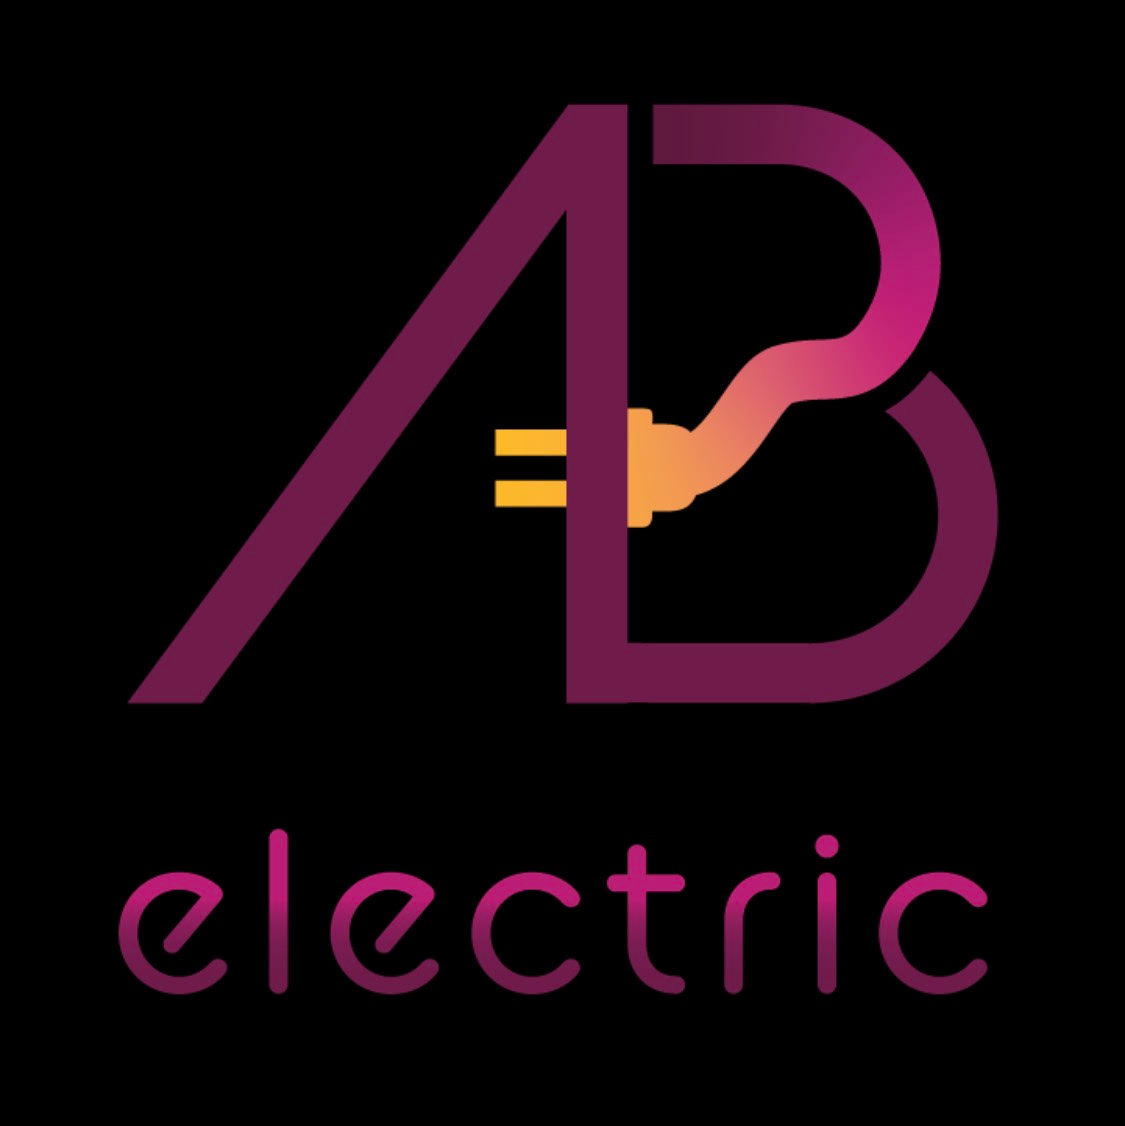 Electric Logo Design